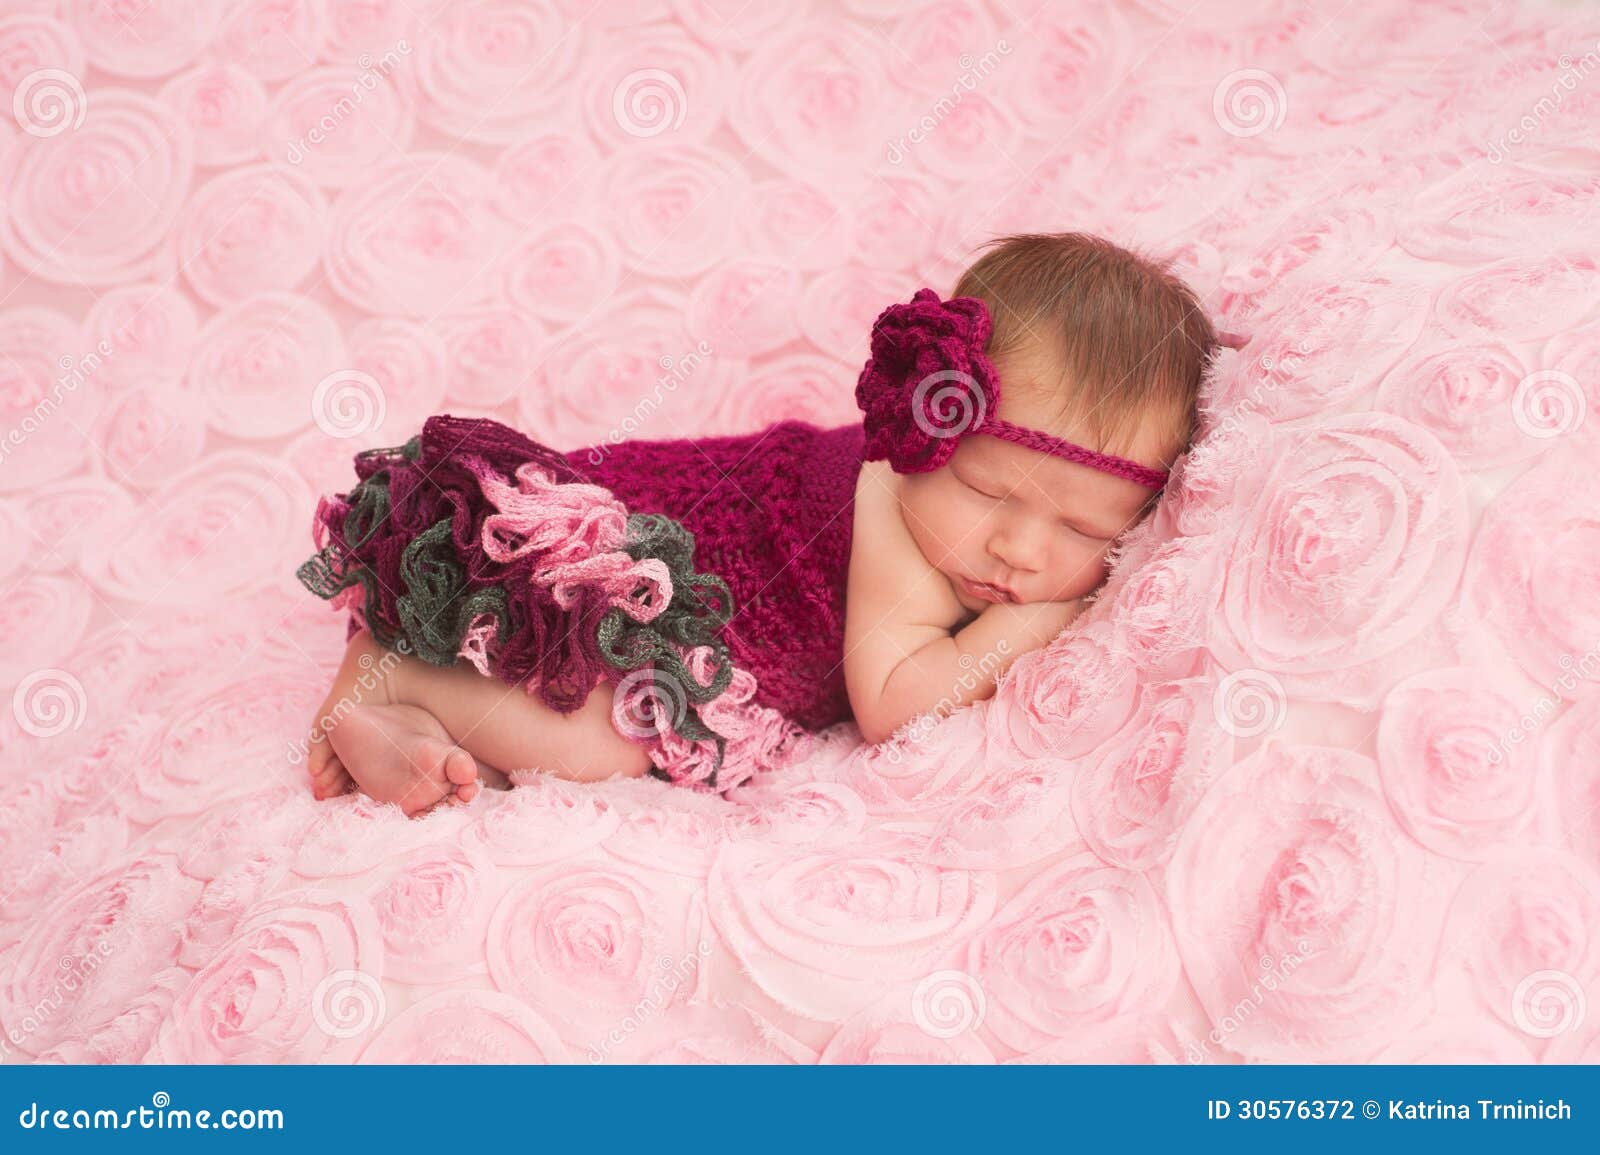 newborn baby girl wearing a crocheted romper